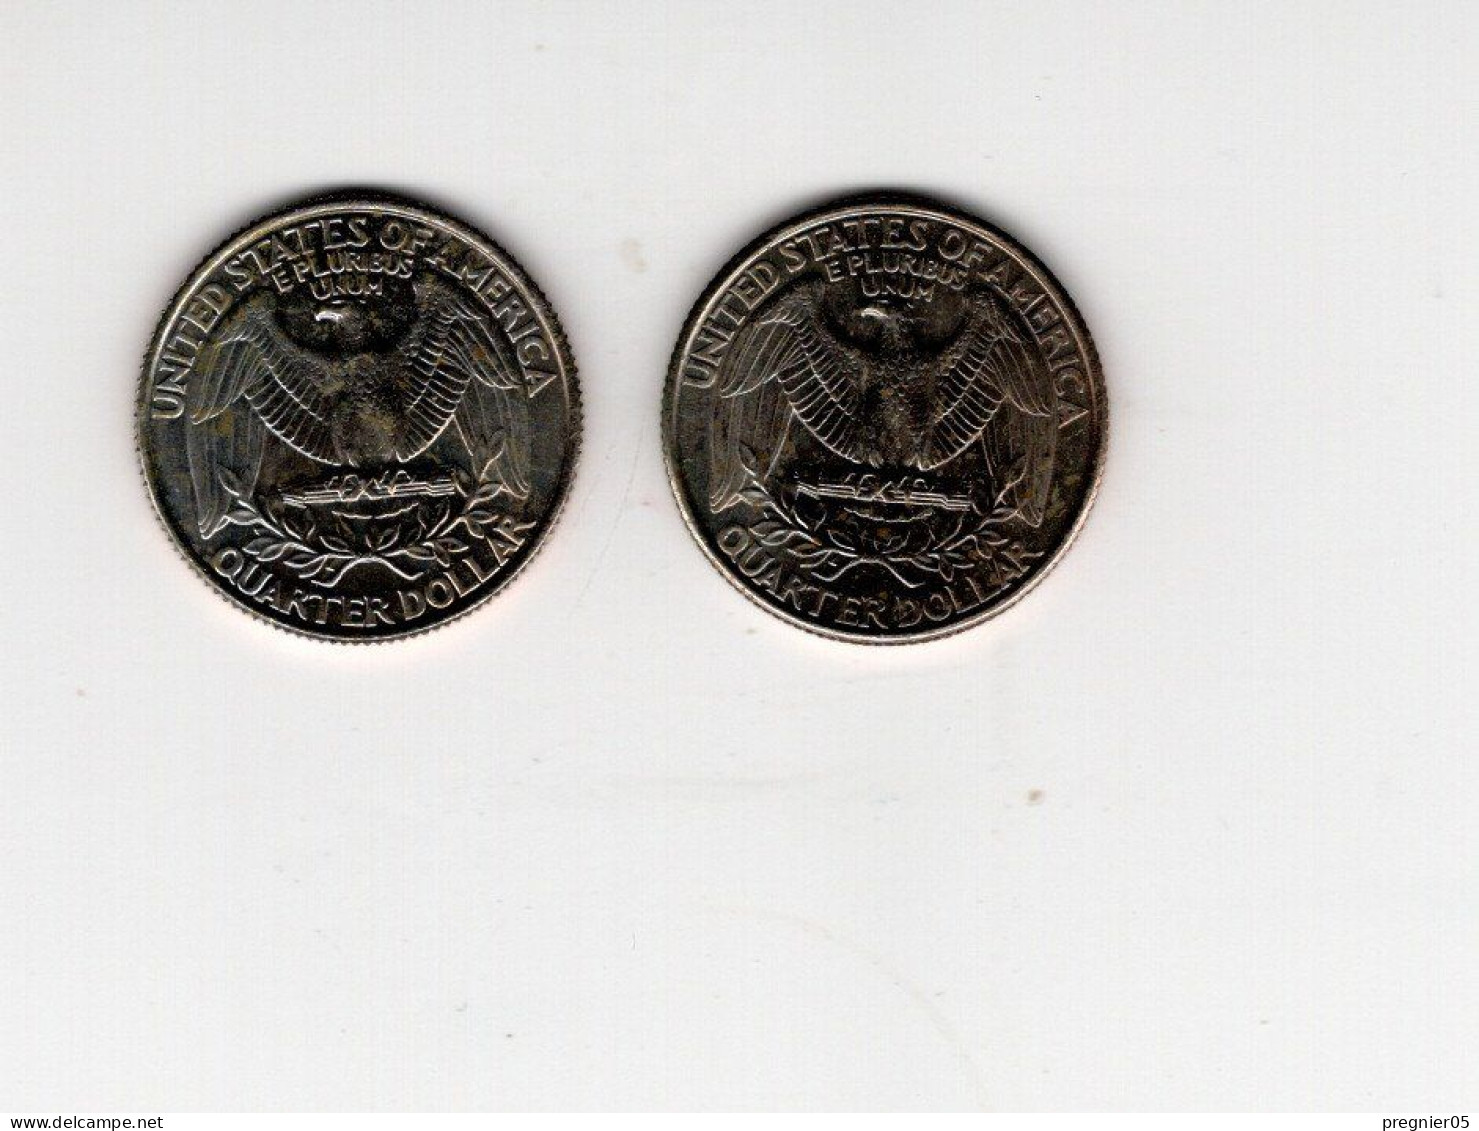 USA - Lot 2 Pièces 1/4 Dollar Washington Quarter  1993D + P  SUP+/XF+  KM.164a - 1932-1998: Washington